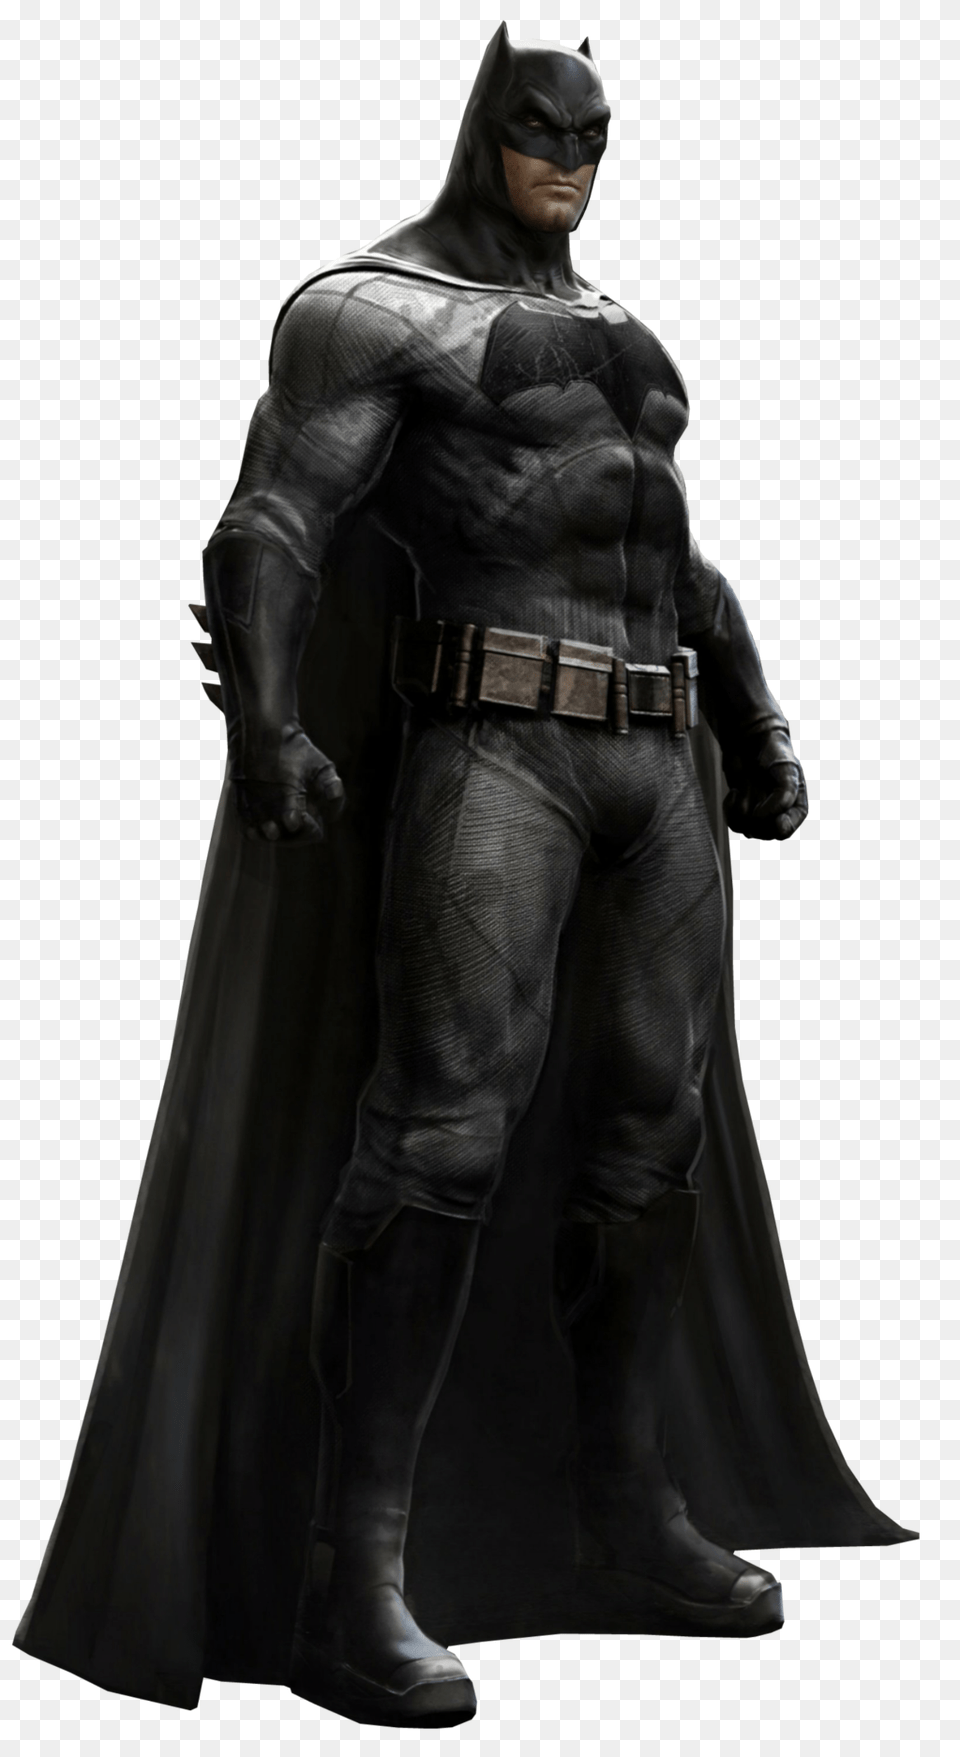 Batman, Adult, Male, Man, Person Png